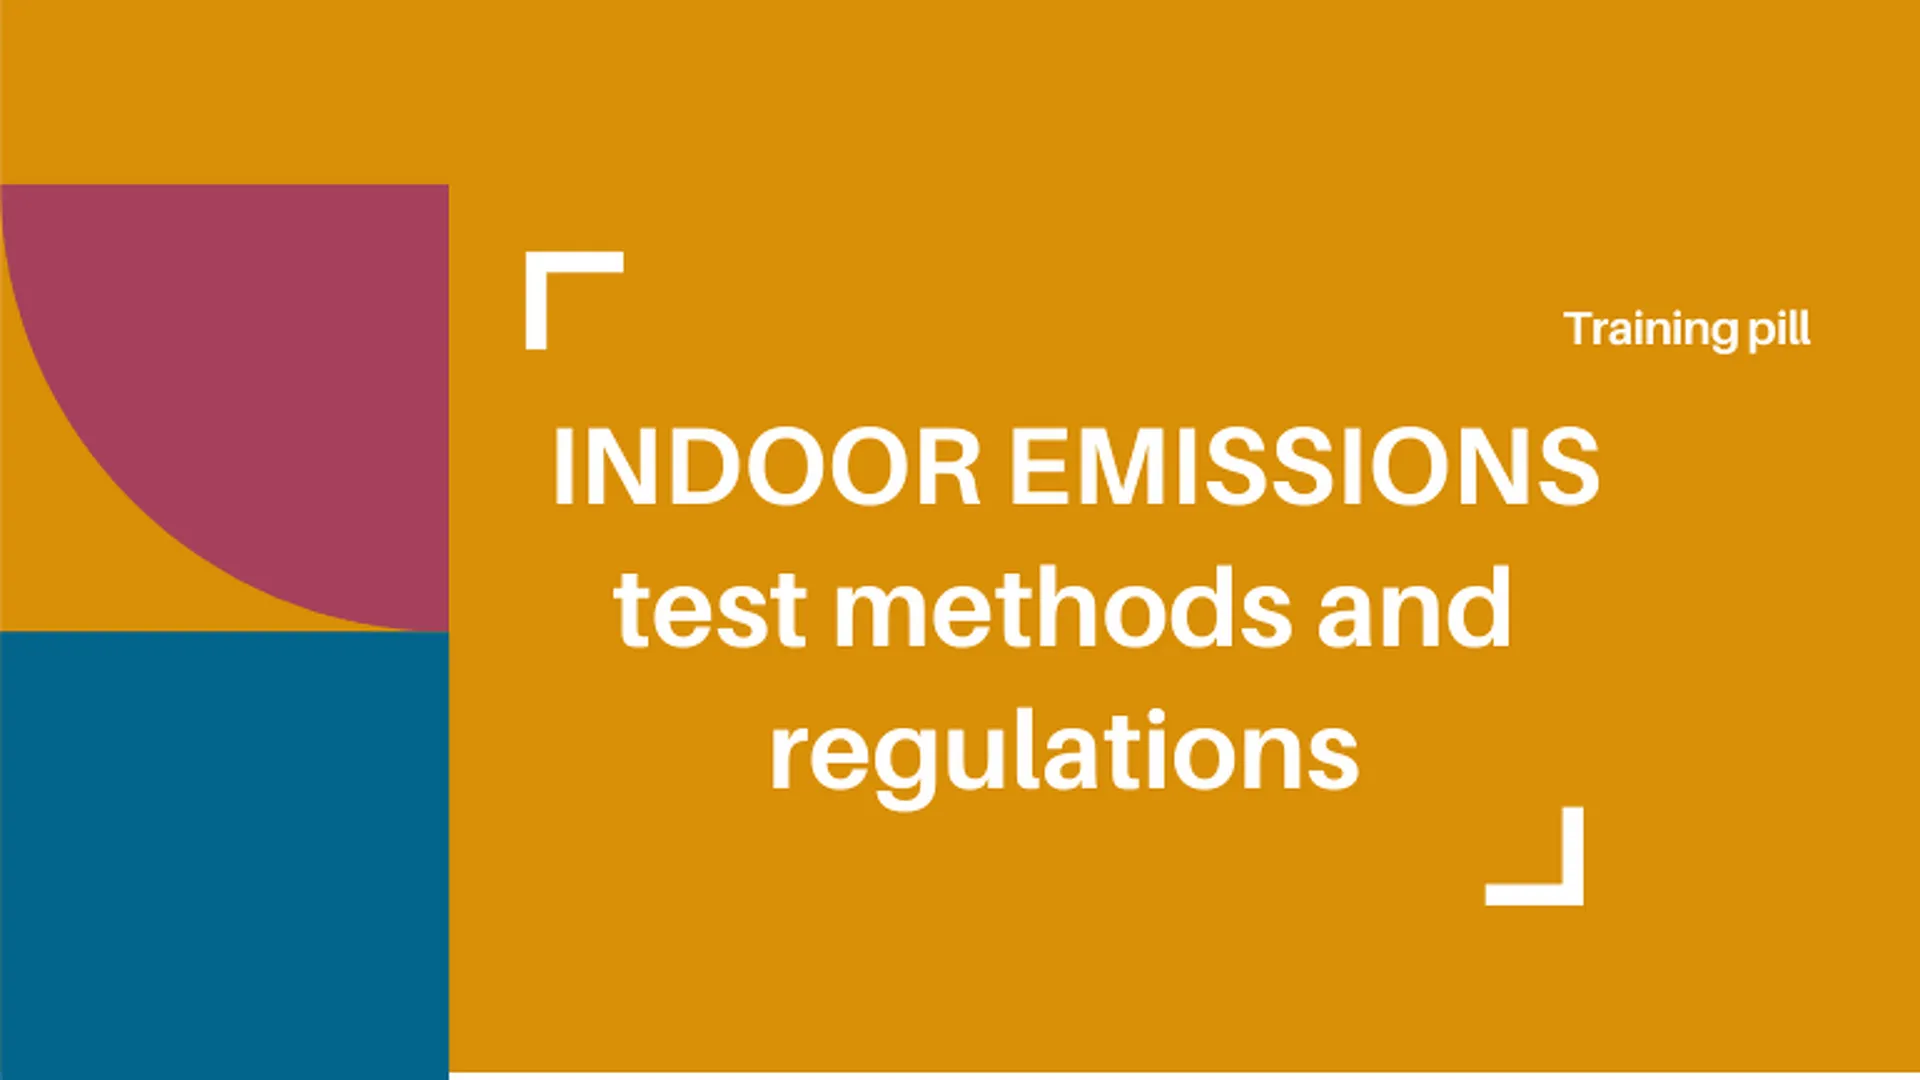 INDOOR EMISSIONS: test methods and regulations